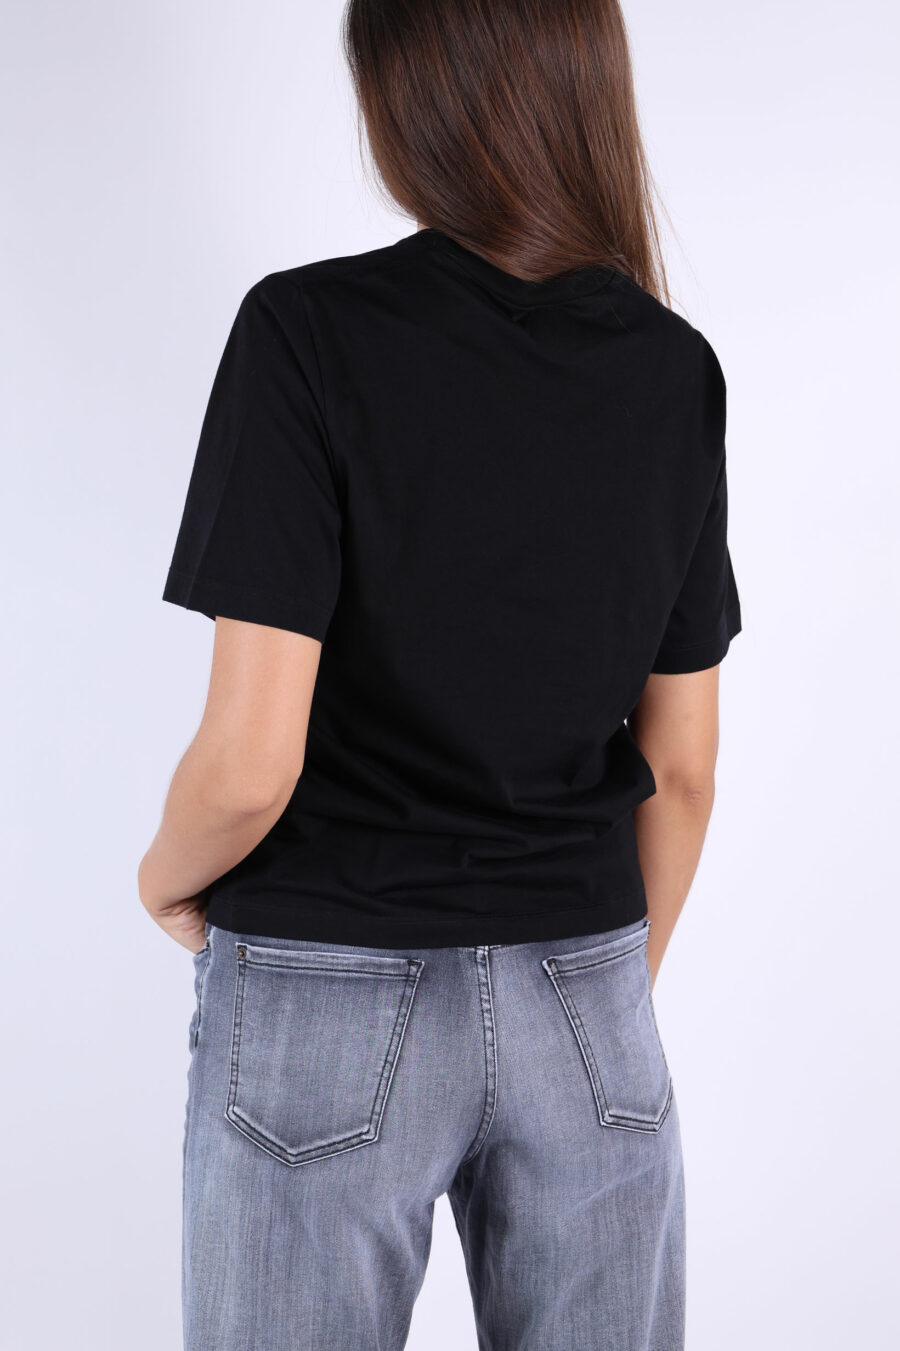 Black T-shirt with "Pac-man" logo - 361223054662201963